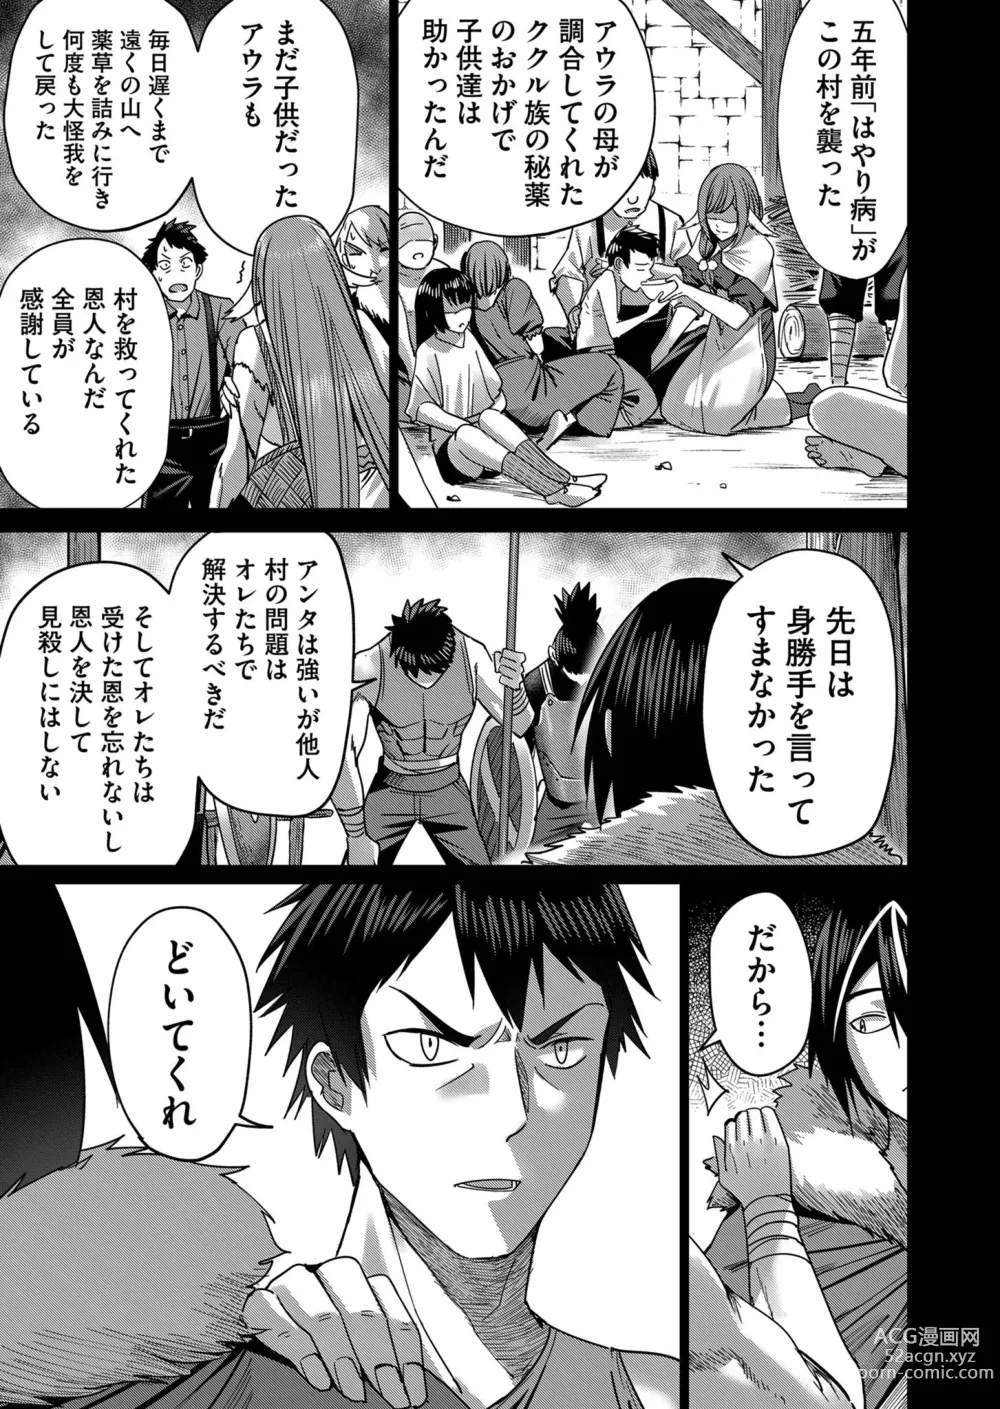 Page 7 of manga Kichiku Eiyuu Vol.02